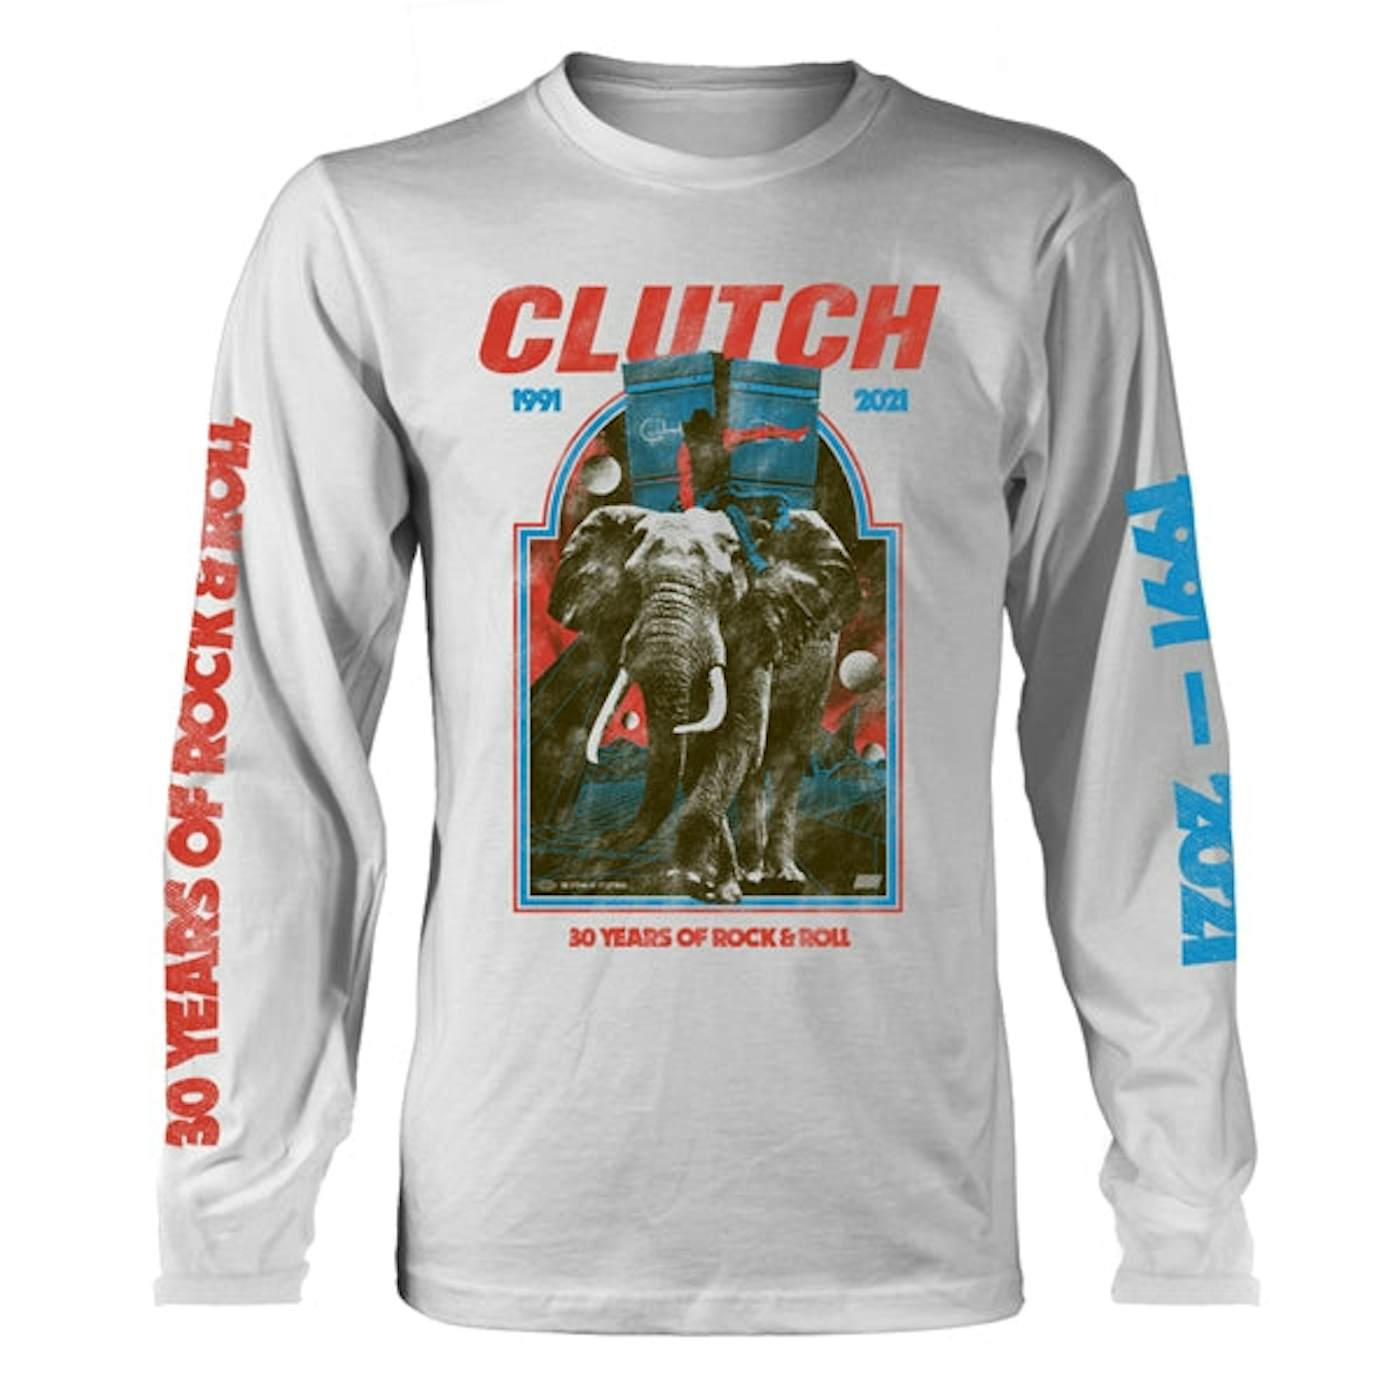 Clutch Long Sleeve T Shirt - Elephant (White)